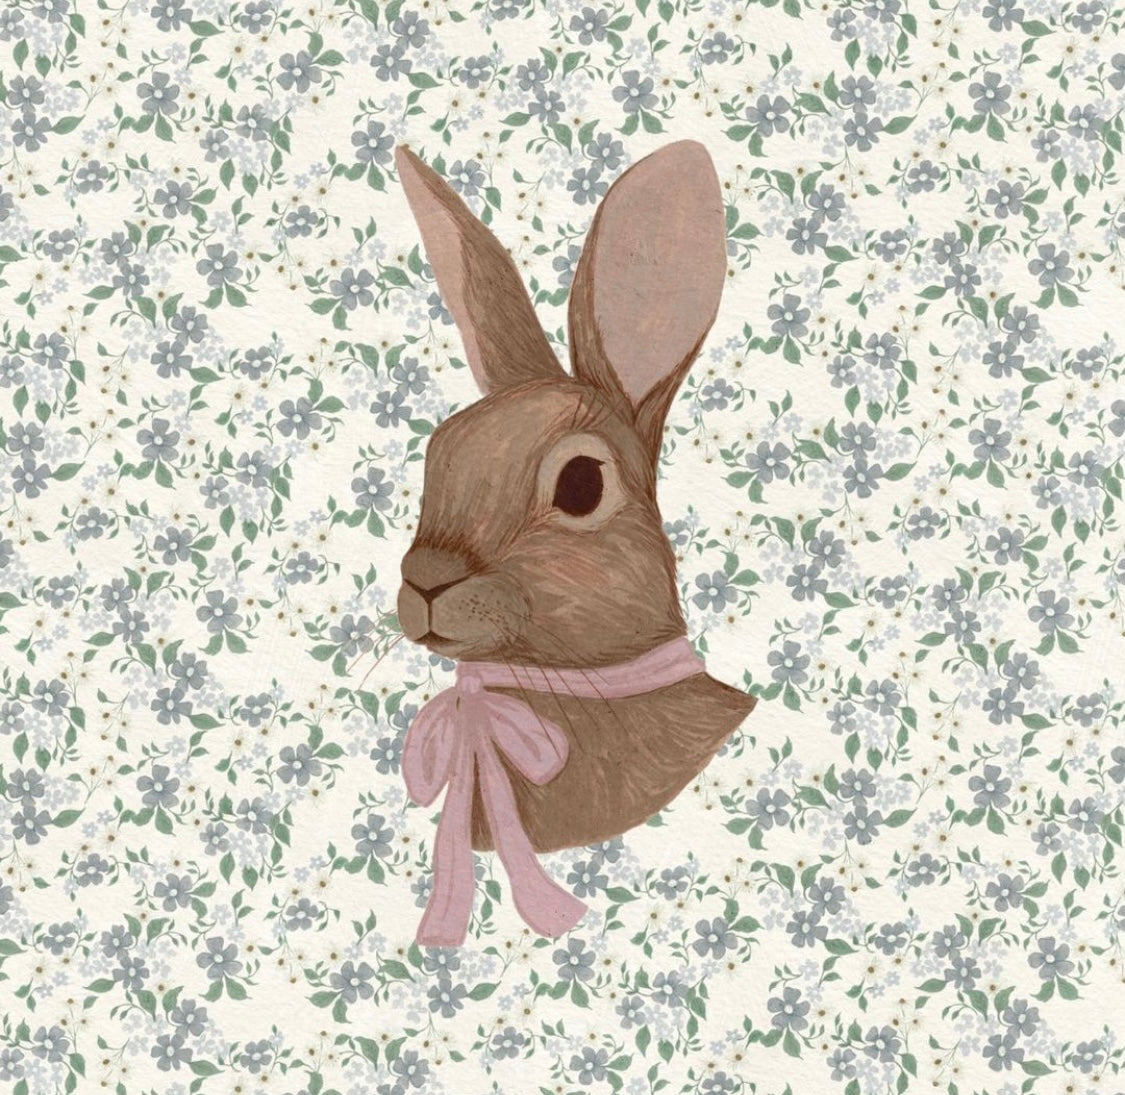 Vintage rabbit